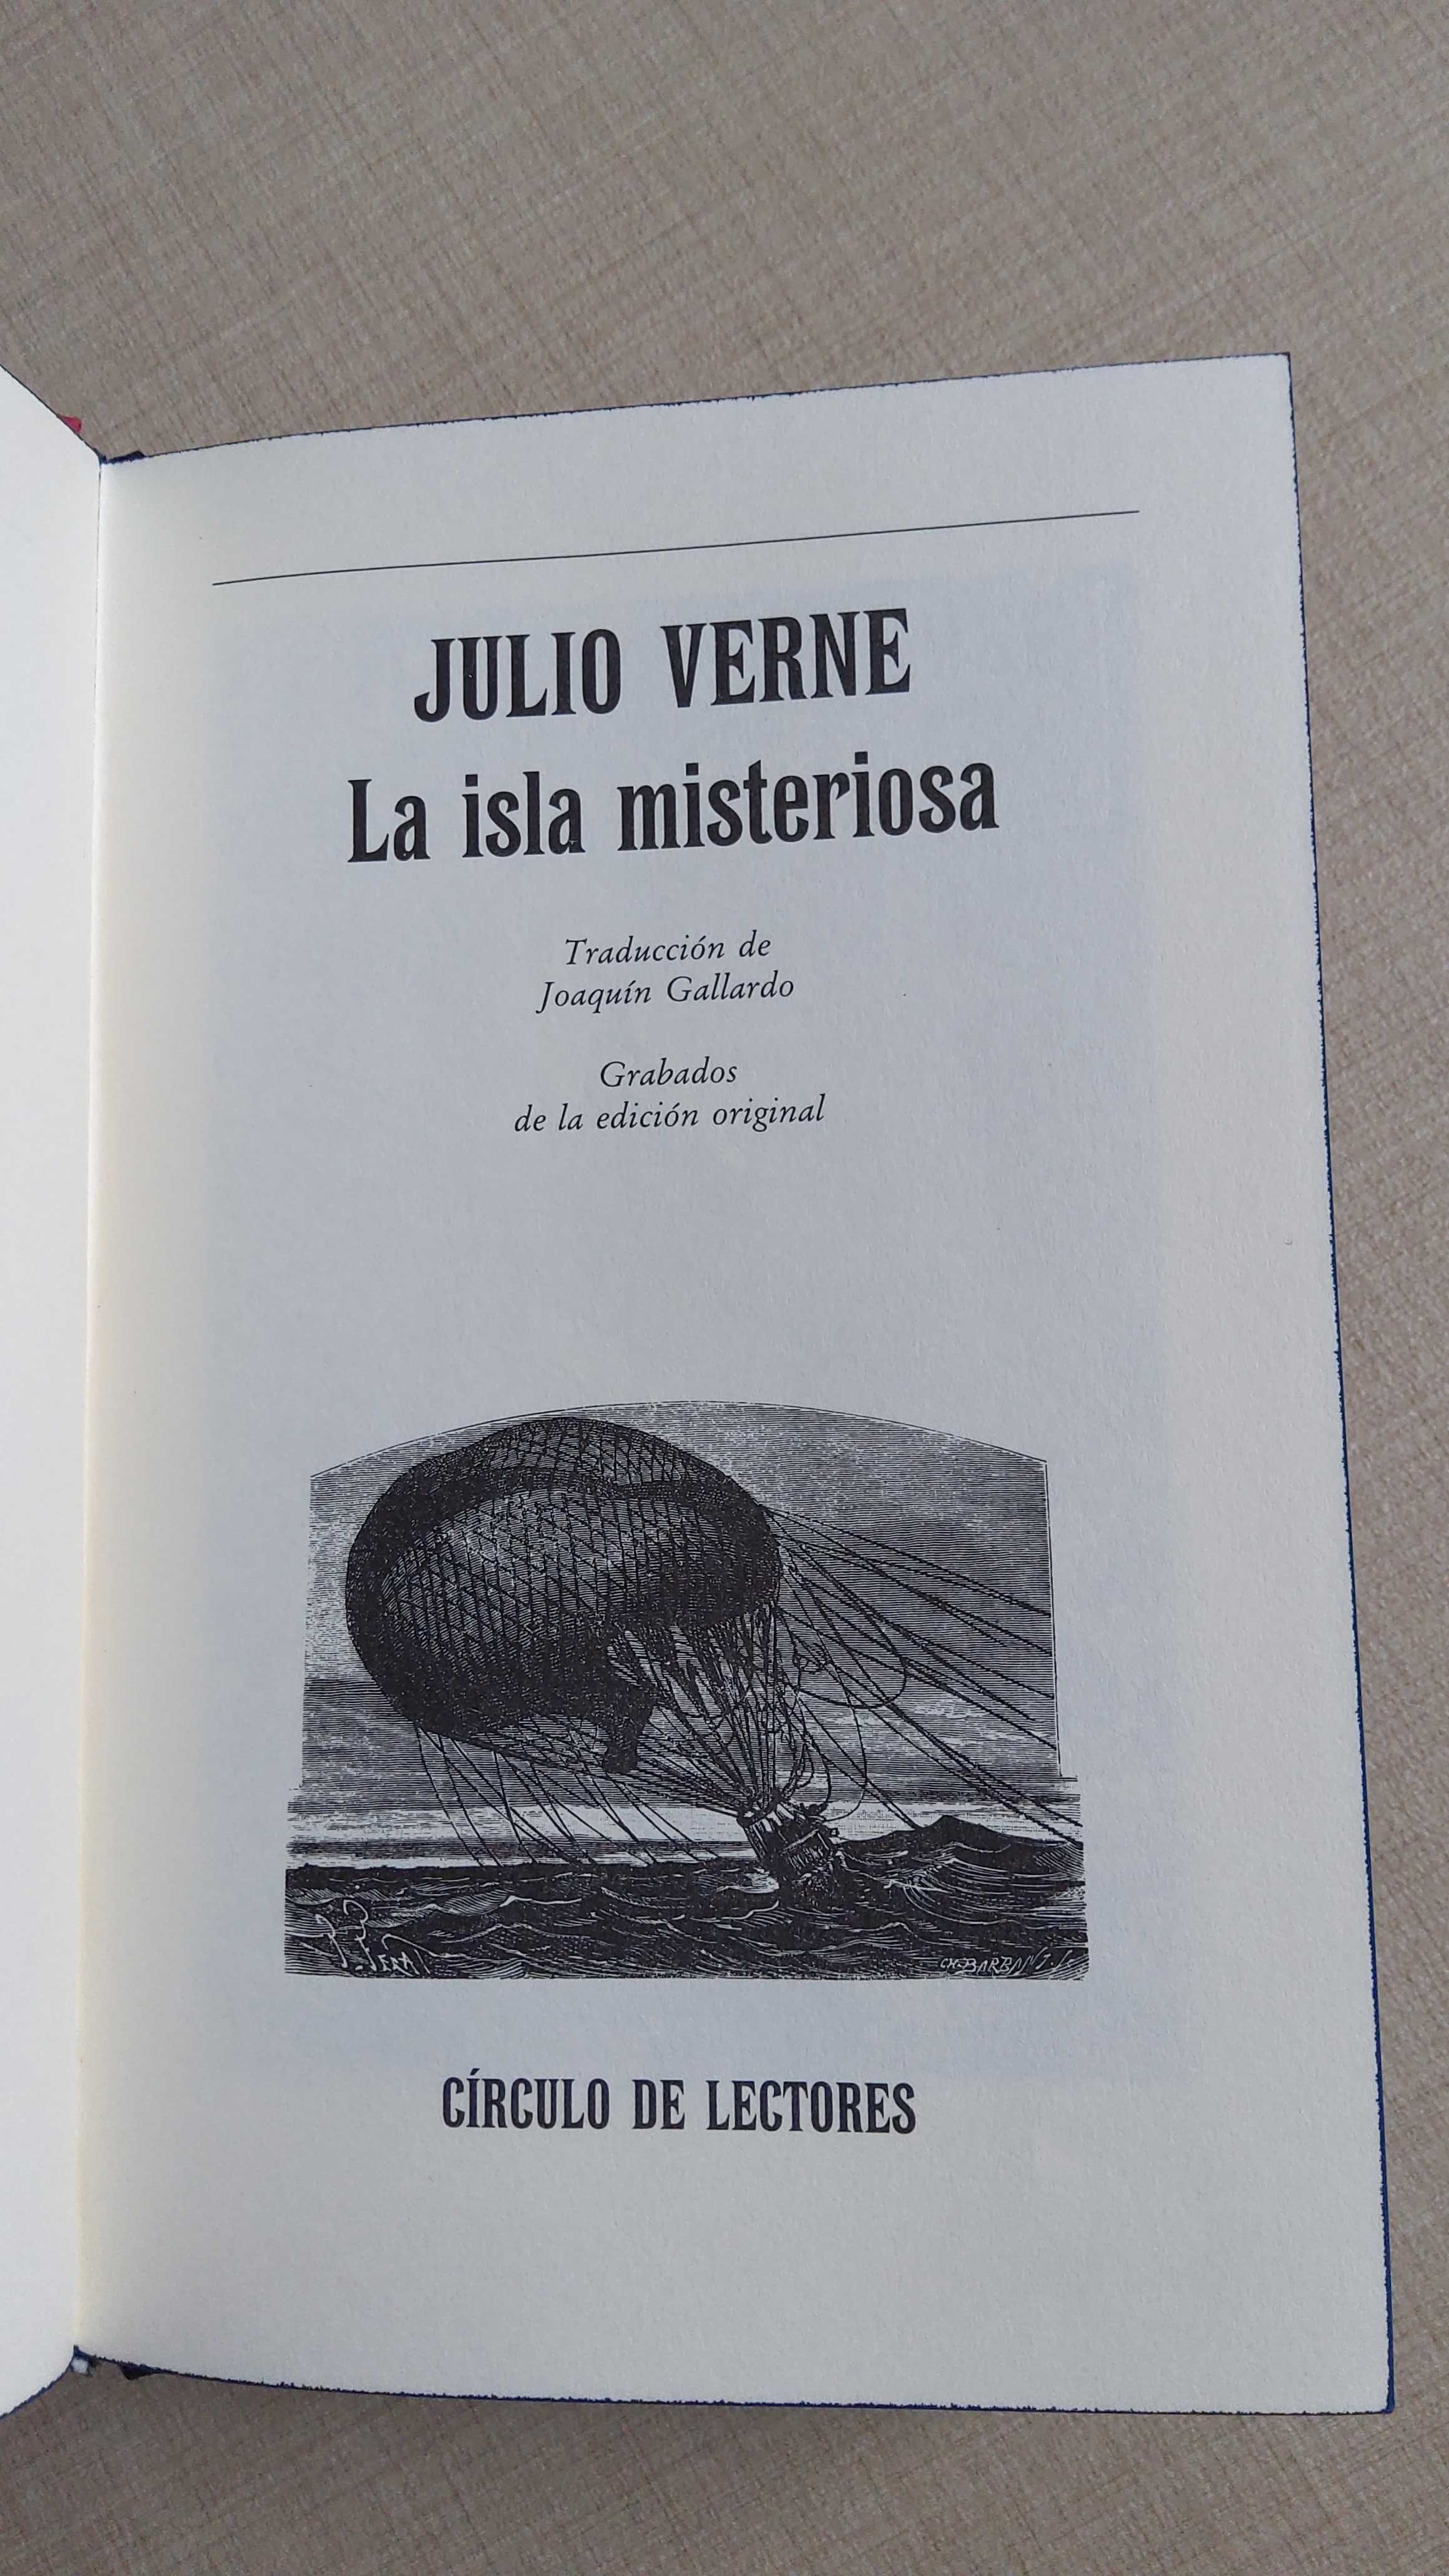 Julio Verne La isla misteriosa hiszpański reprint oryginalnego wydania